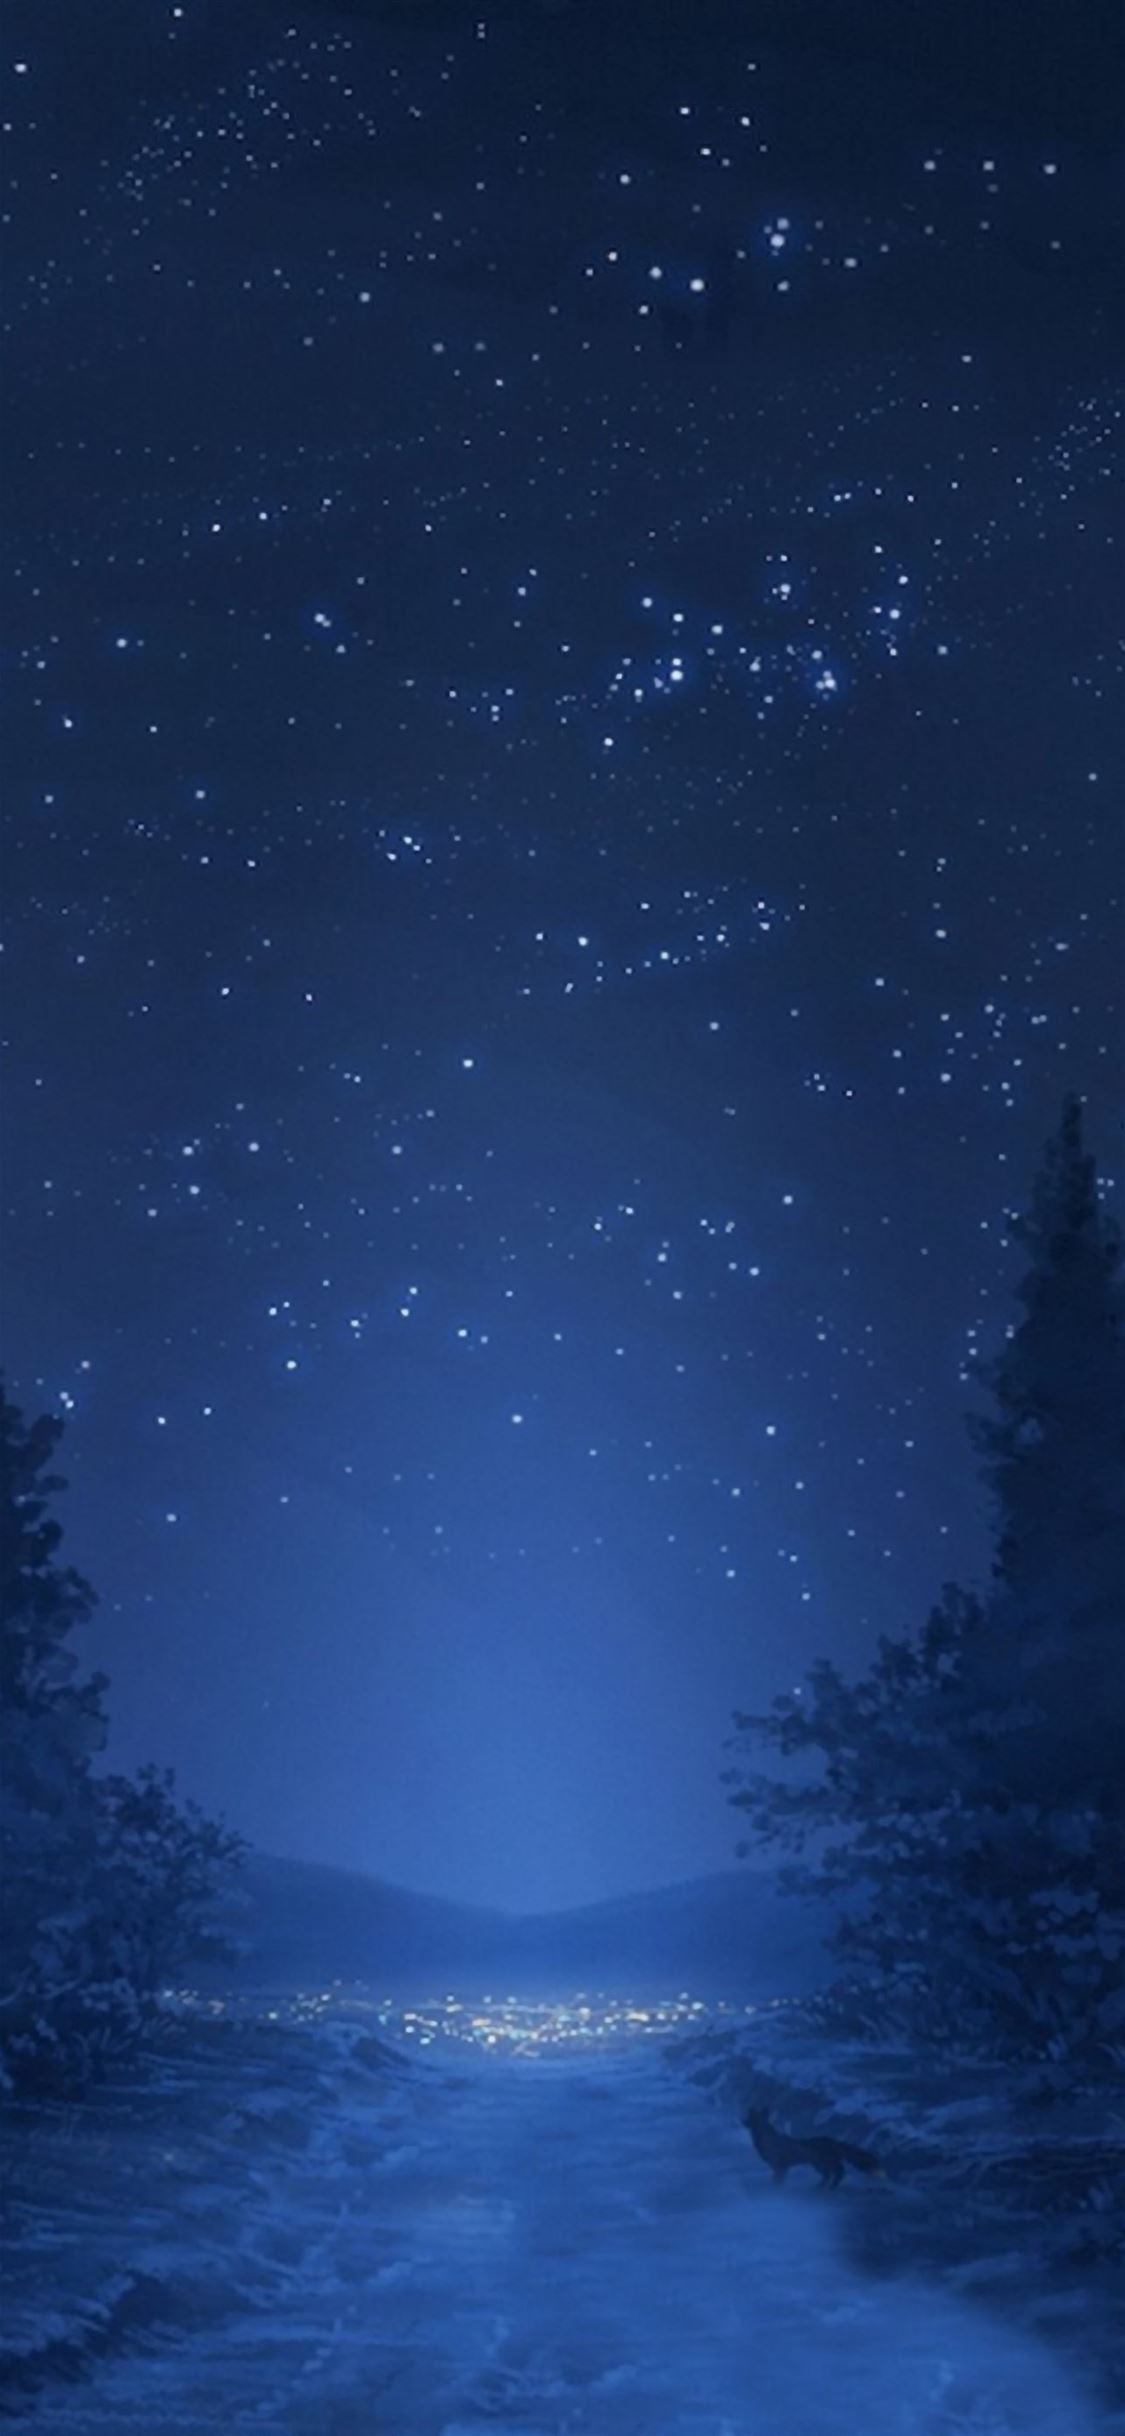 Night sky iPhone wallpaper 